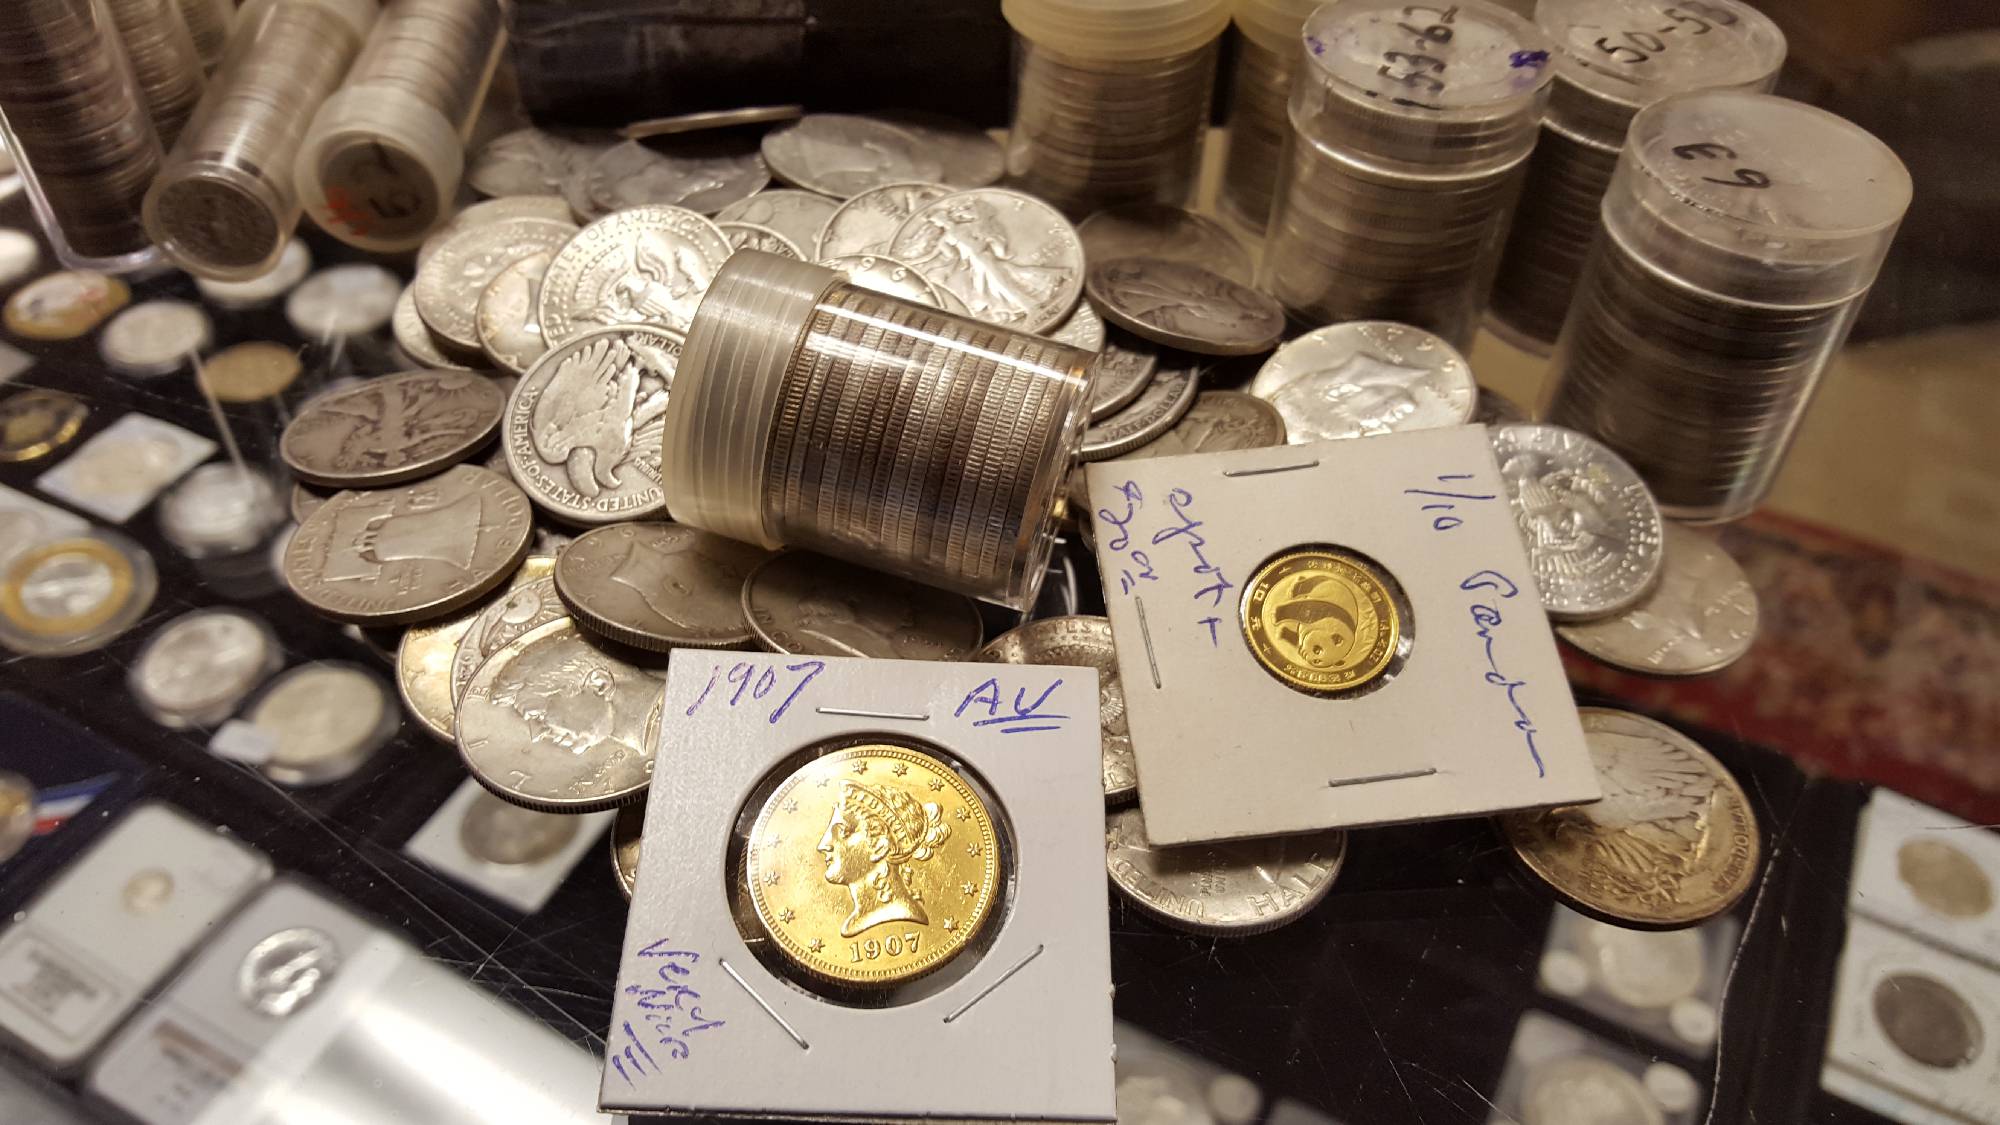 The Coin Shop Coin Dealer Silver Bullion Gold Bullion We Buy Scrap Gold Jewelry Brighton Mi 48116 Coin Dealer,What Is Mutton Paya